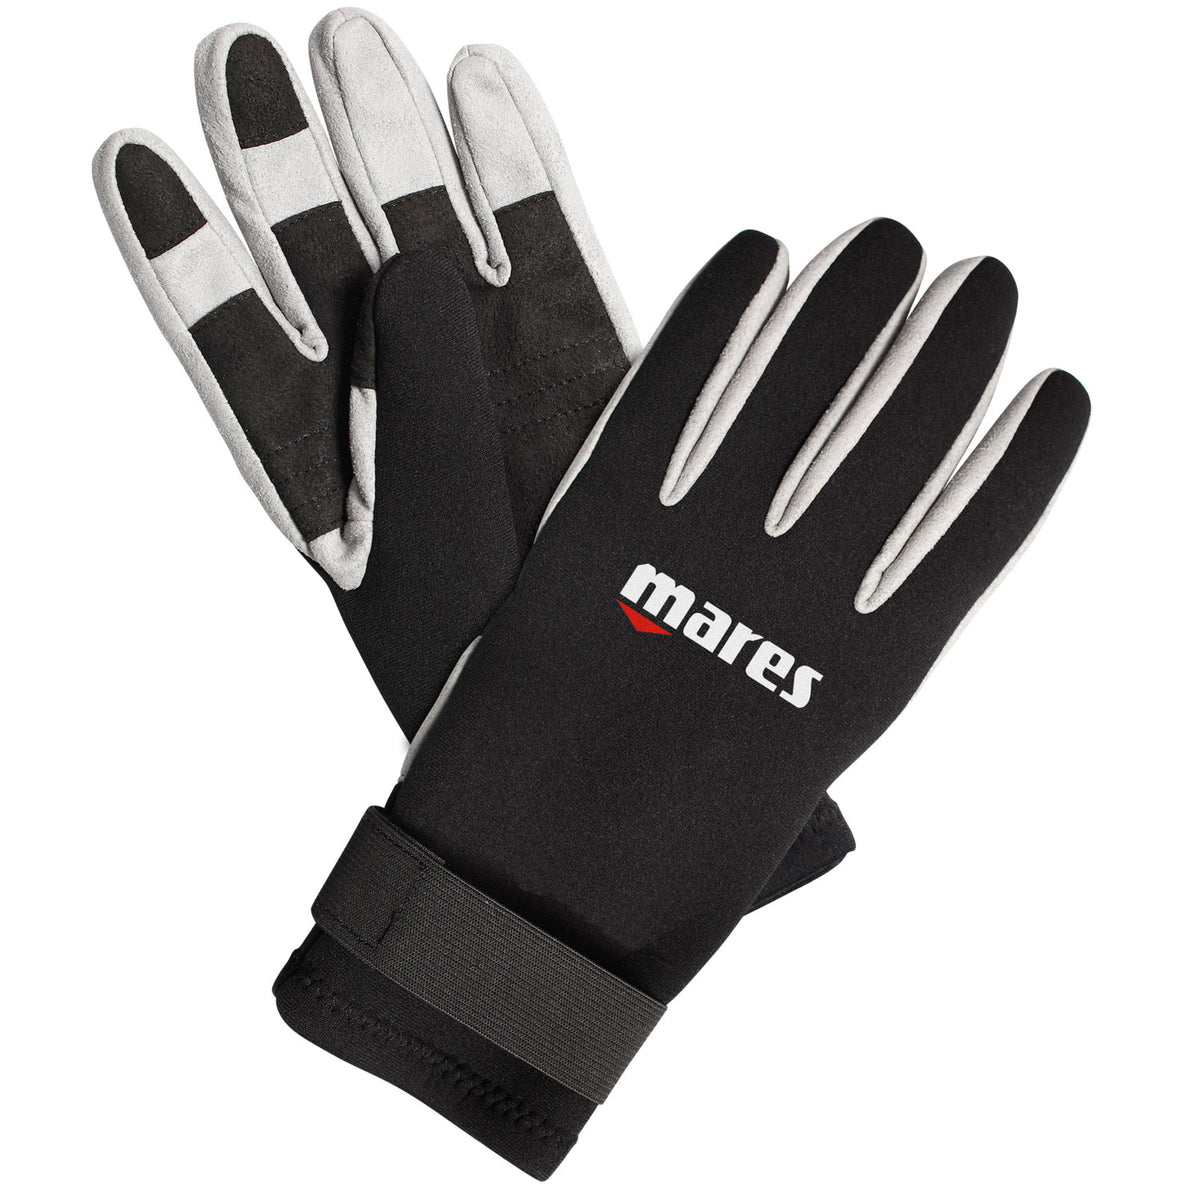 Visit Mares Amara 2mm Dive Gloves Mares to find more. Shop in our